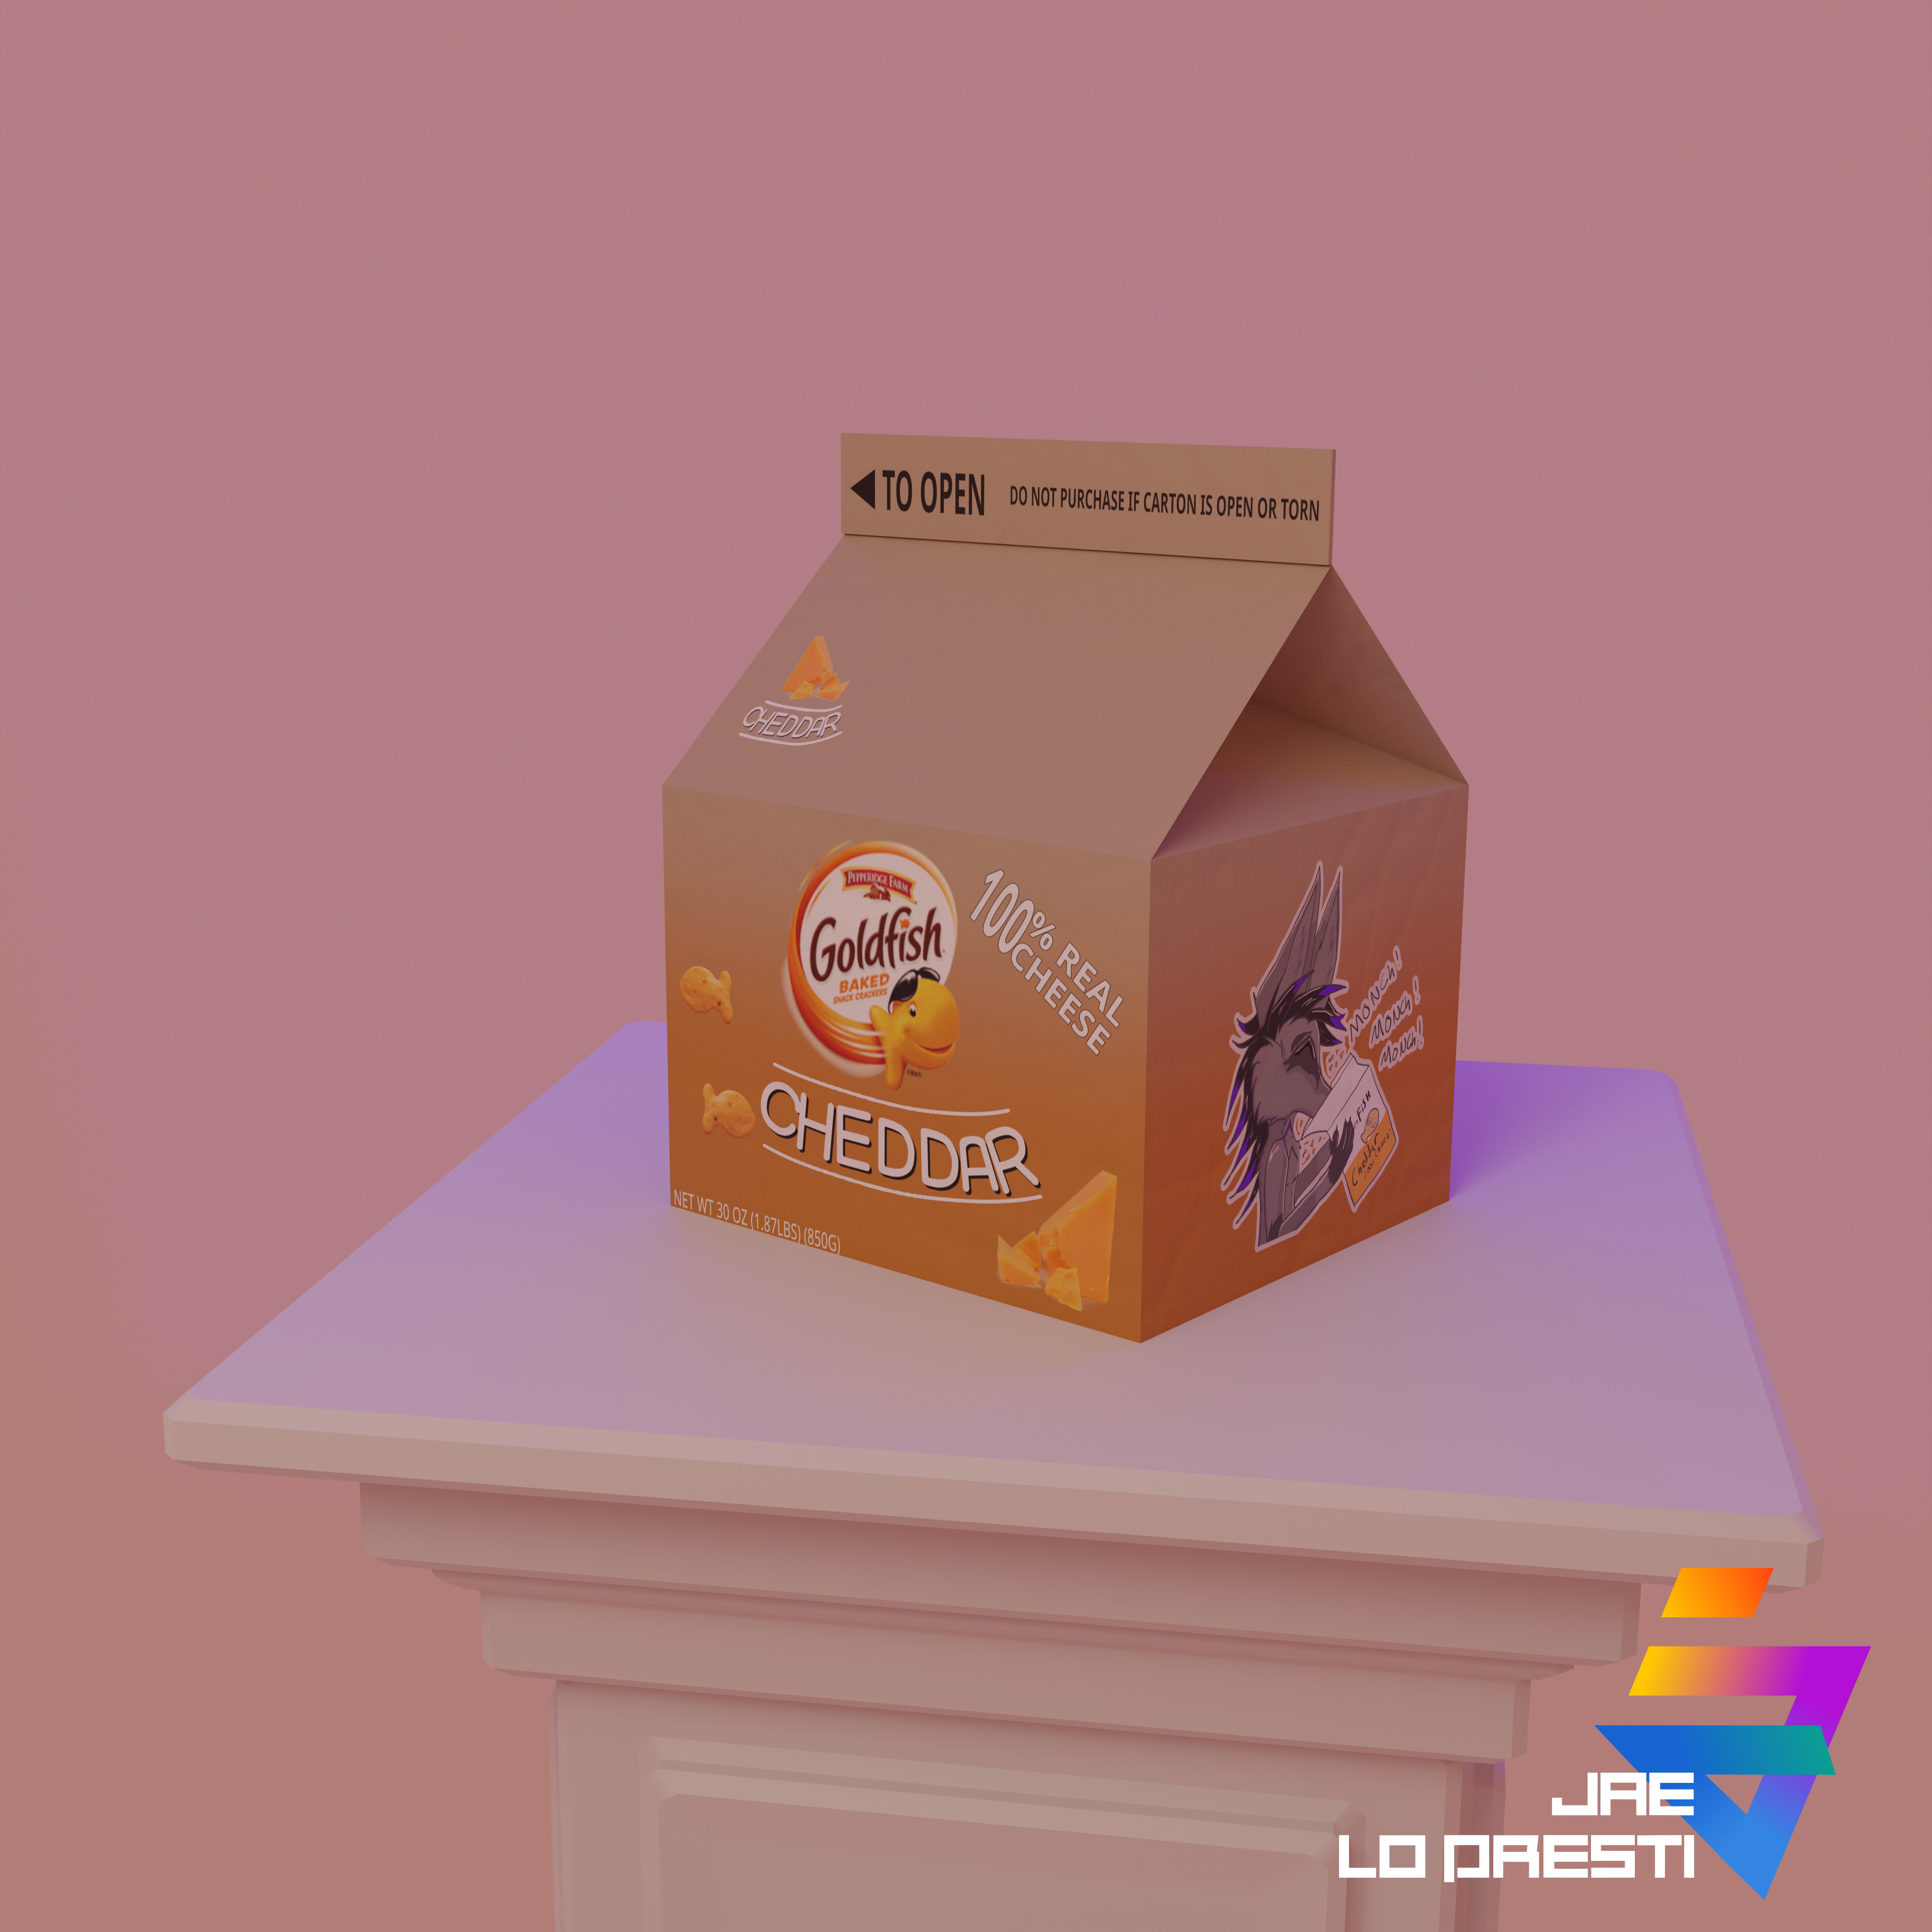 Carton of Goldfish cheddar snacks, dimly lit on a pedestal.